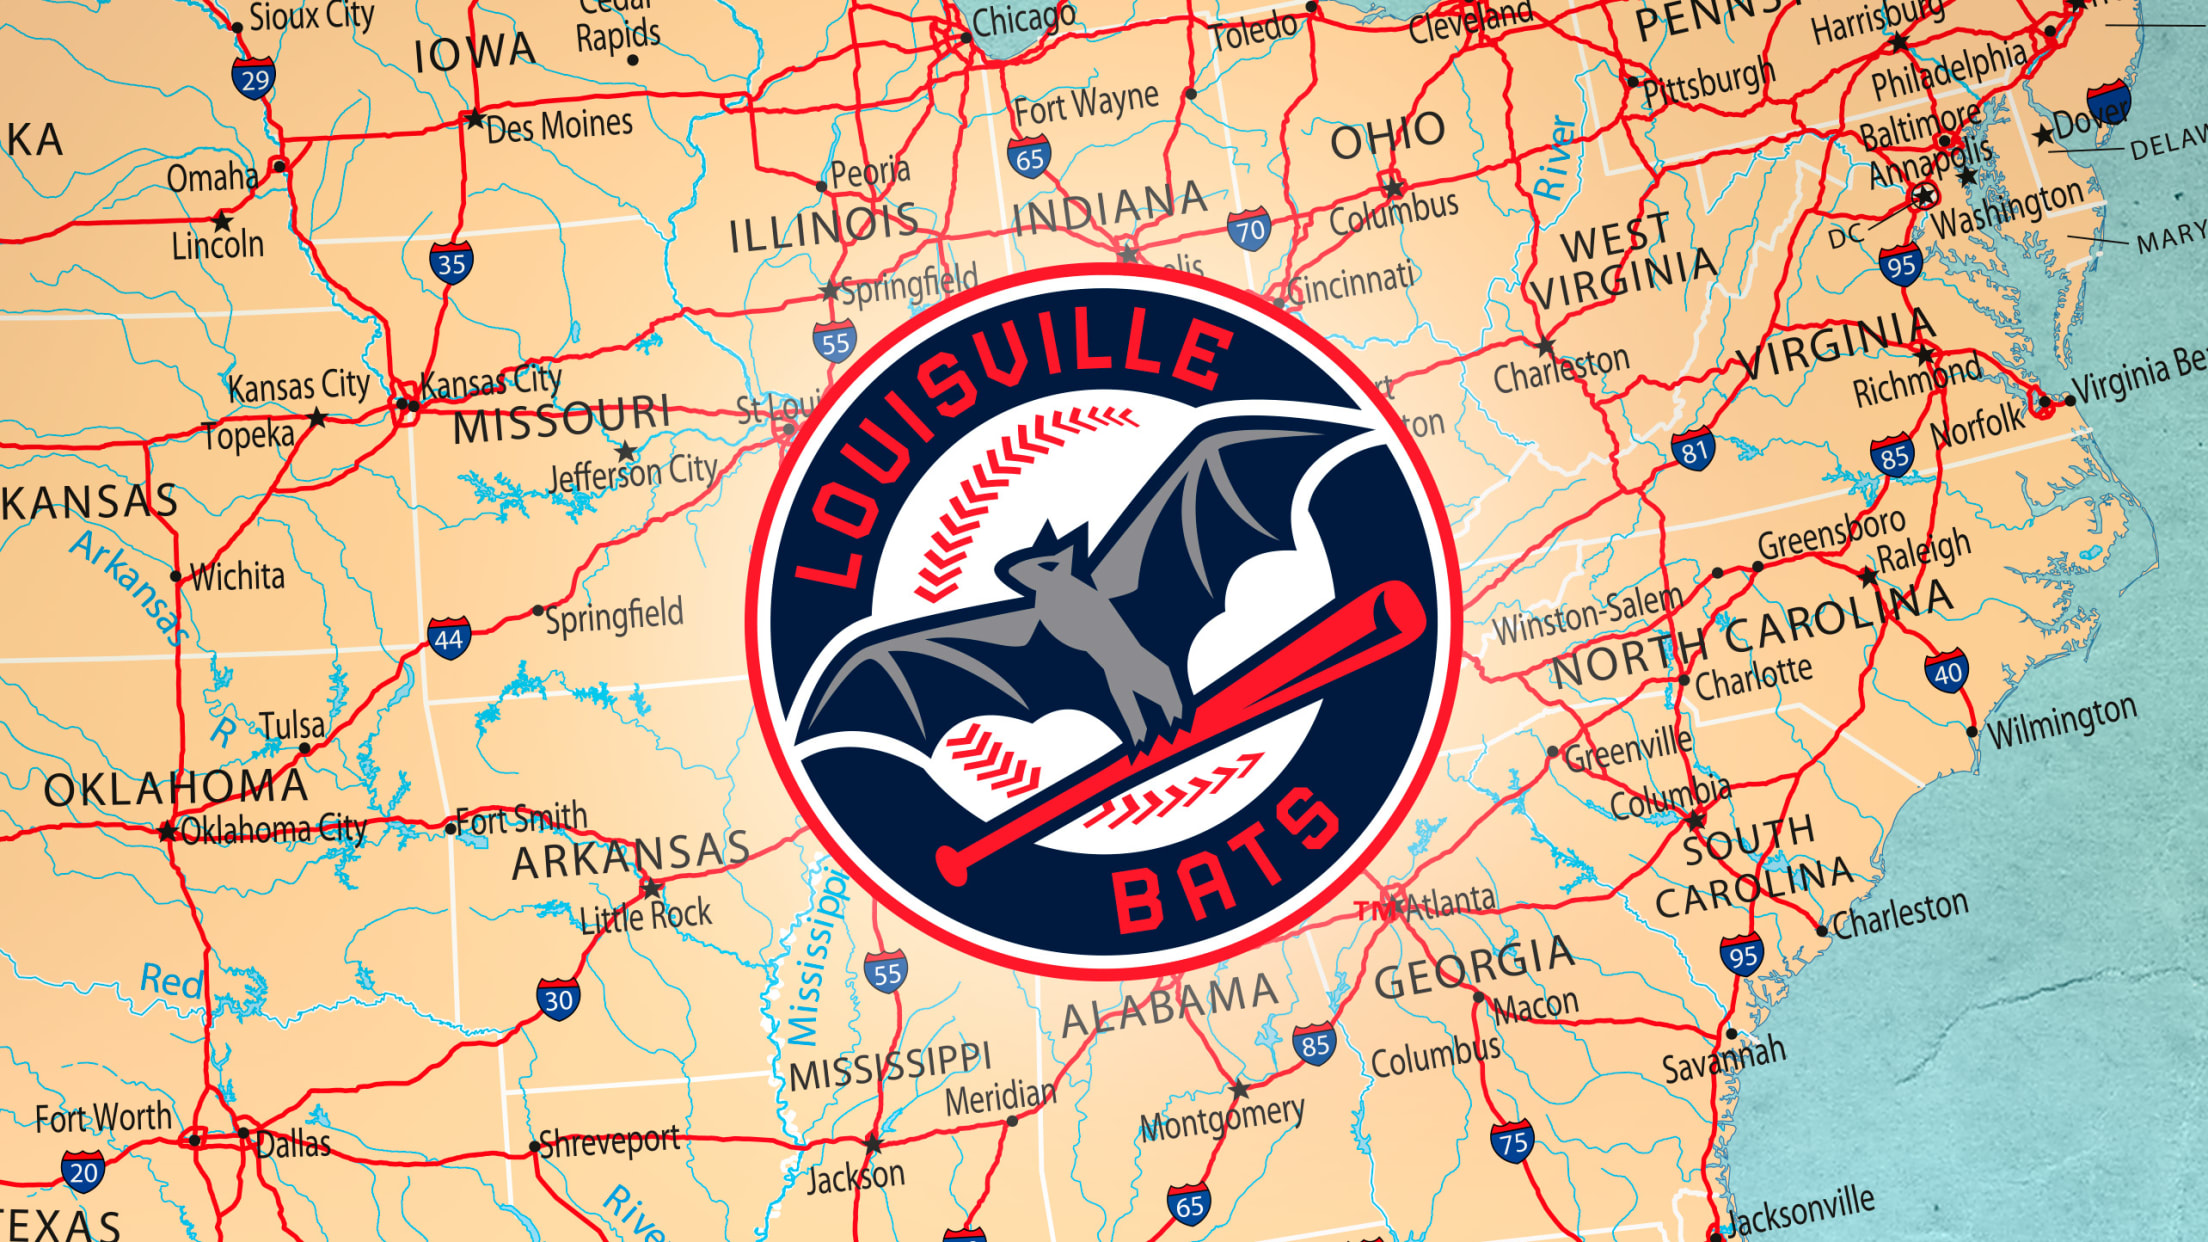 Auction for Louisville Bats Muhammad Ali jerseys begins Wednesday